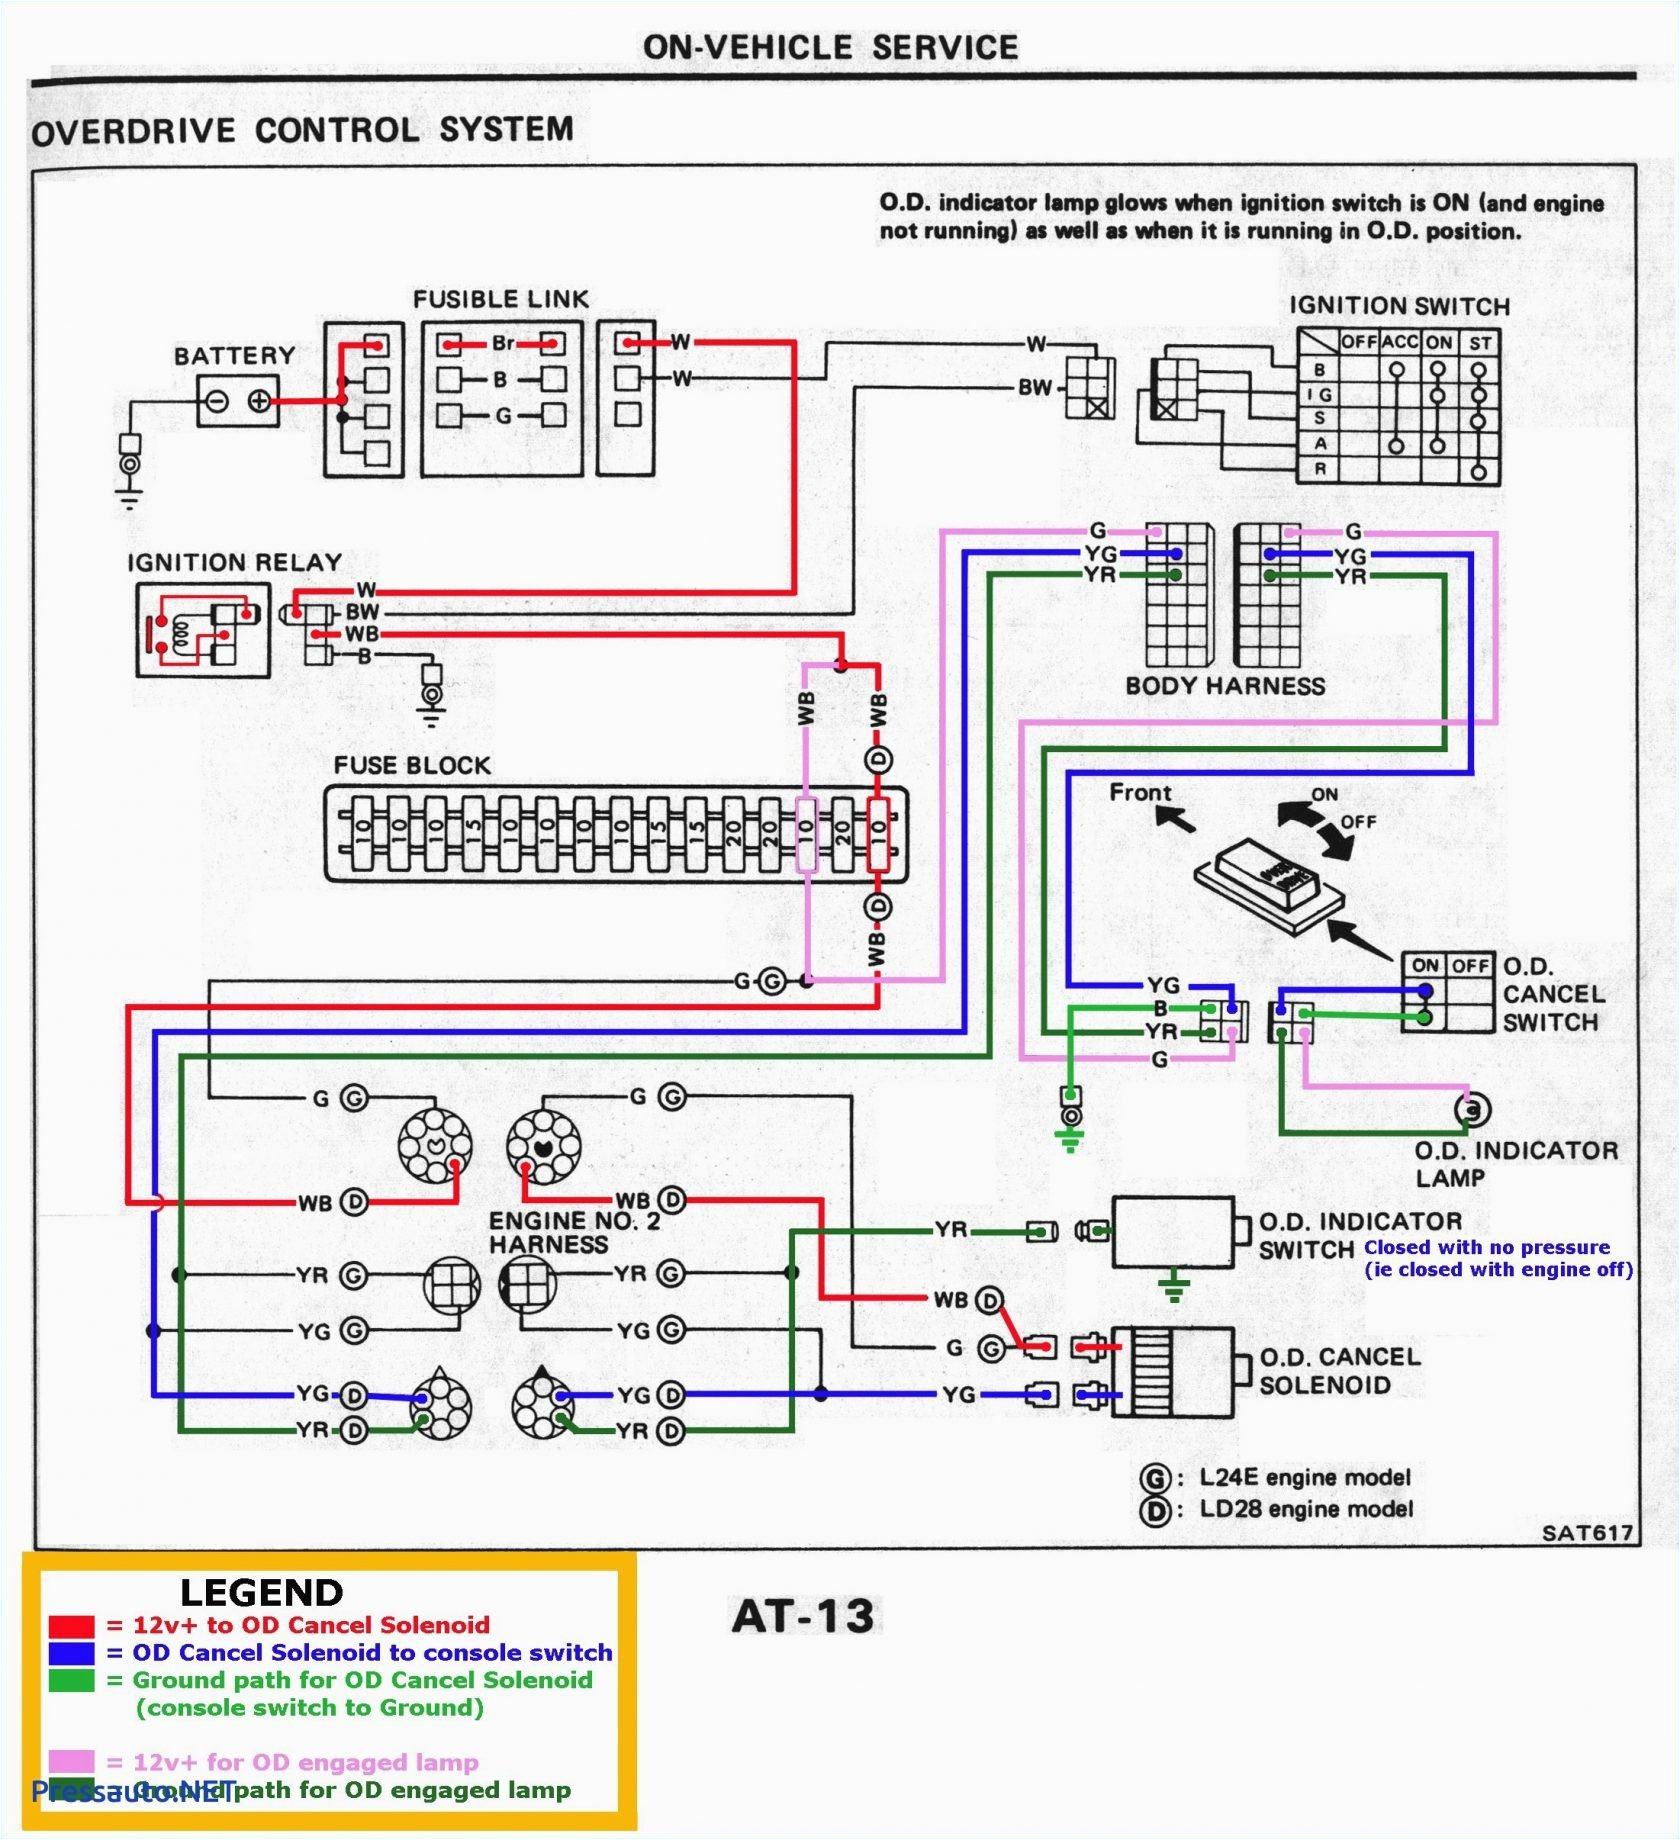 diagram nissan pathfinder radio wiring harness diagram 1995 nissan nissan pathfinder radio wiring harness diagram image details